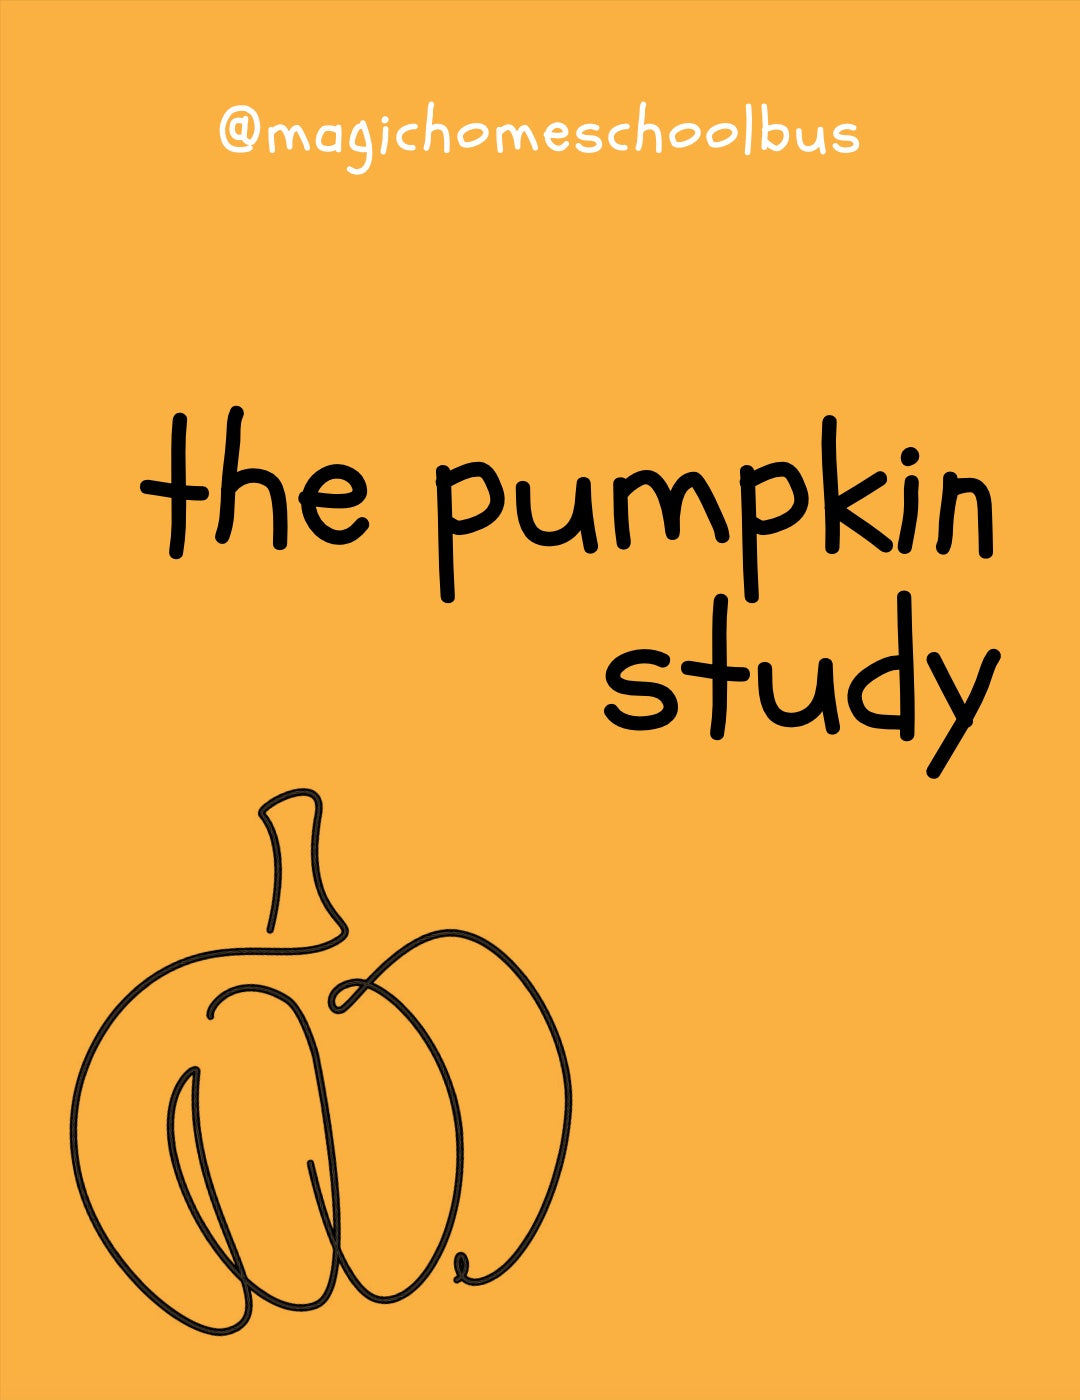 Magic Homeschool Bus - Pumpkin Study